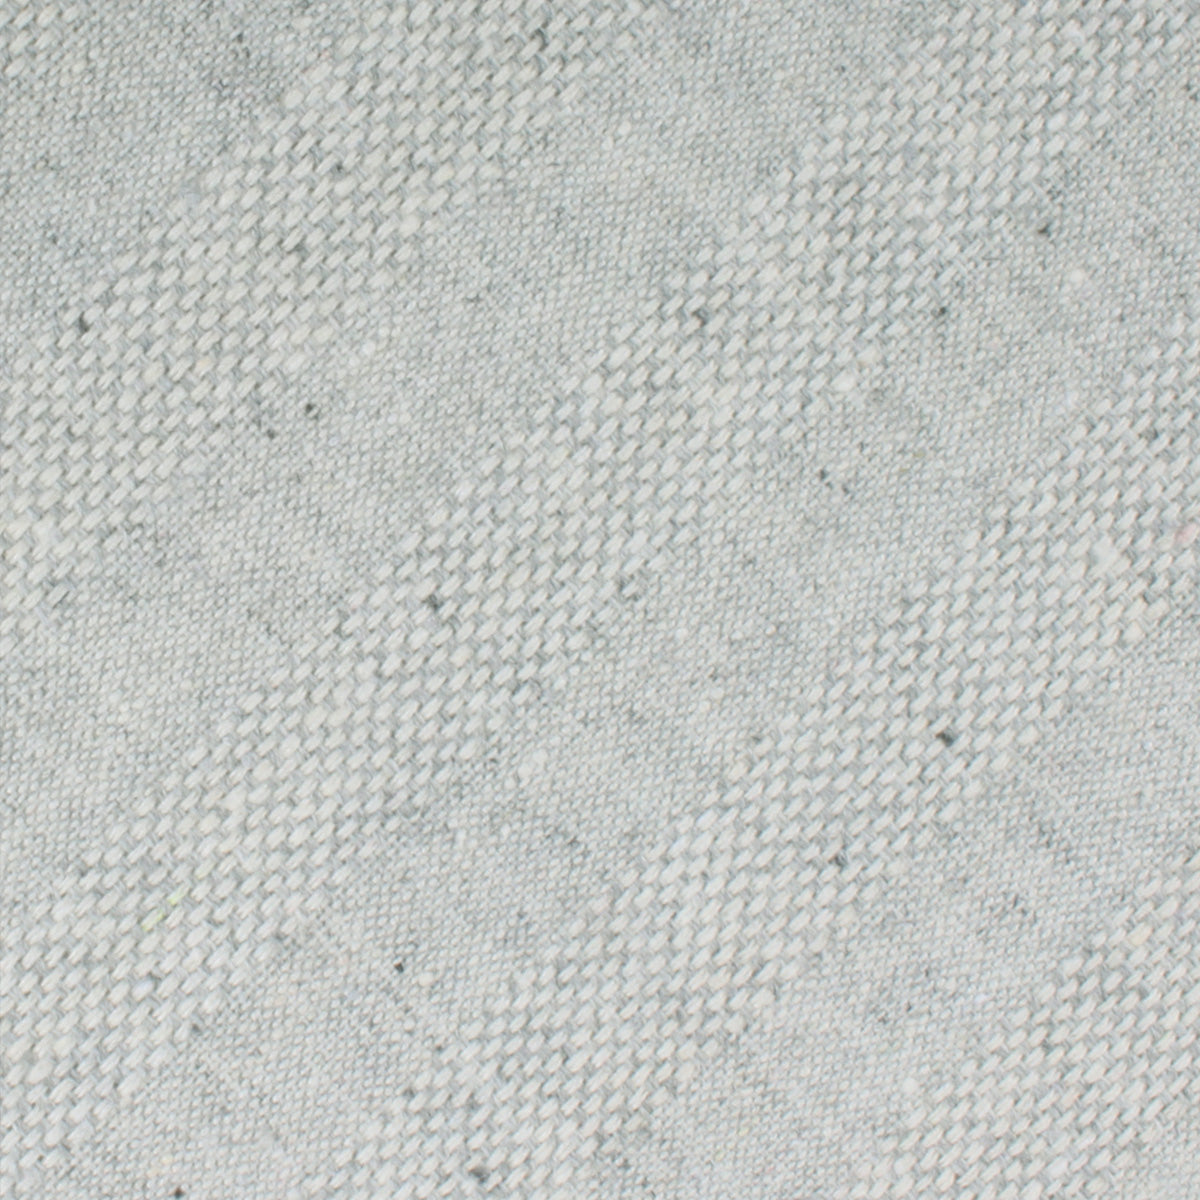 Capri Grey Tweed Striped Linen Fabric Swatch